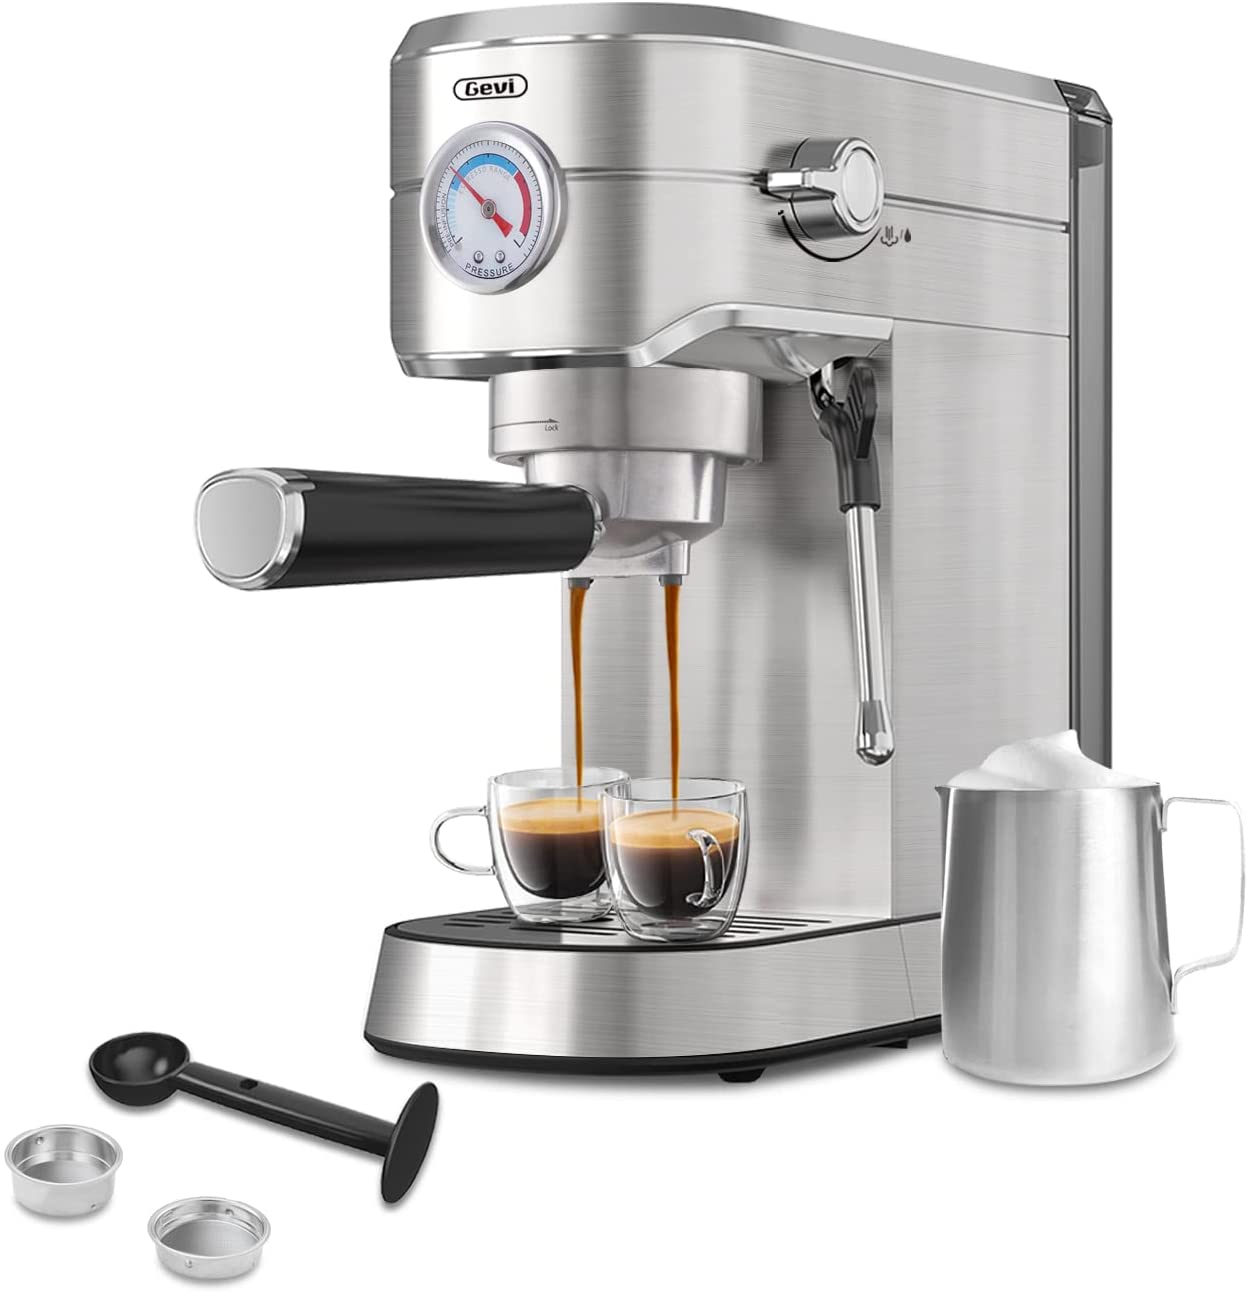 Gevi 20 Bar Compact Professional Espresso Coffee Machine $179.99